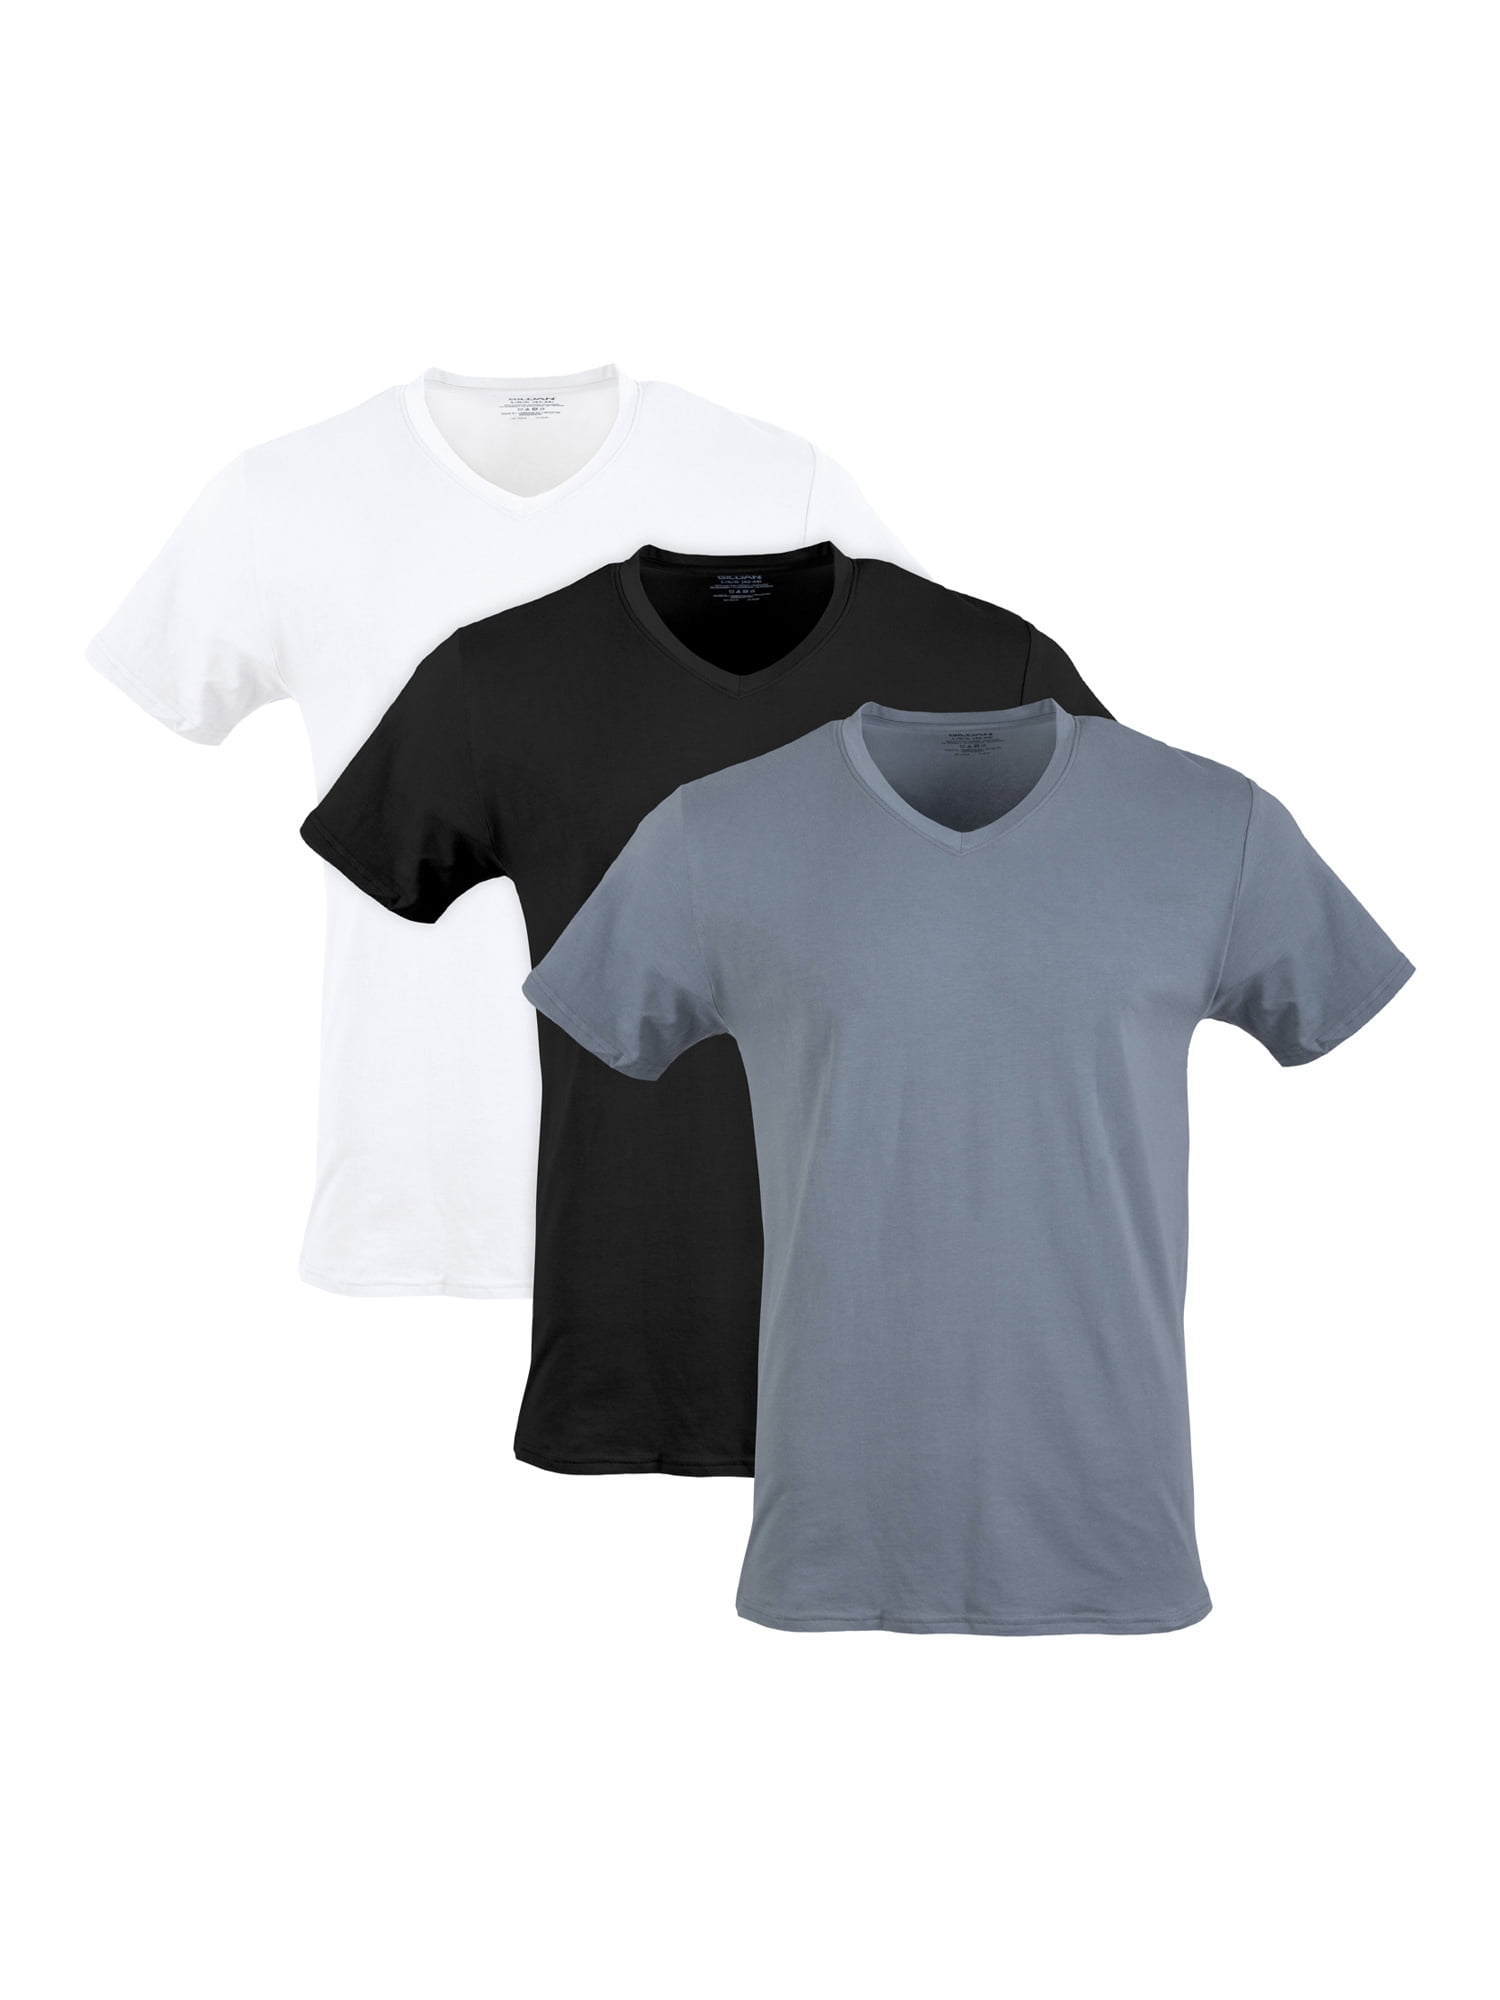 Gildan Men's Short Sleeve Cotton Stretch V-Neck T-Shirts, up to 2XL, 3-Pack